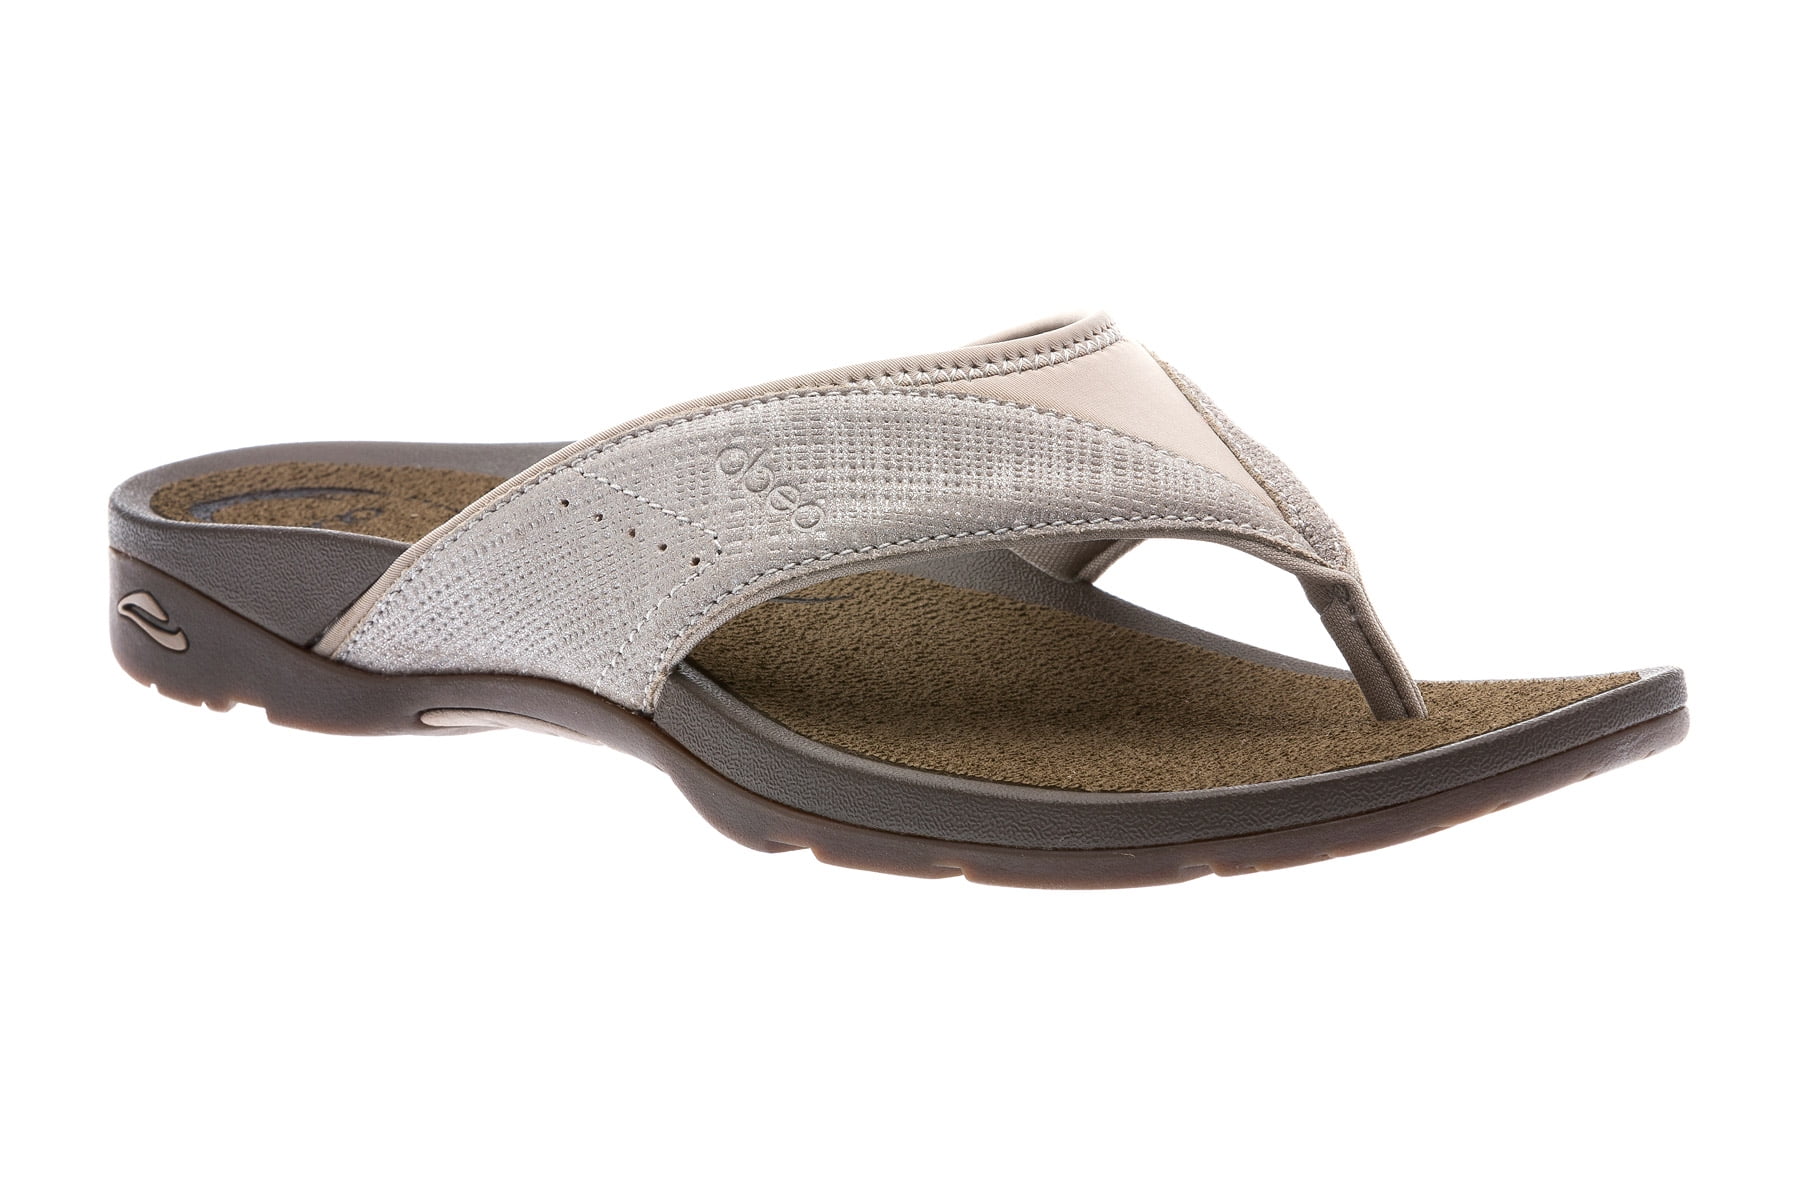 ABEO Footwear - Balboa Post - Women's Flip Flop Sandals - Walmart.com ...